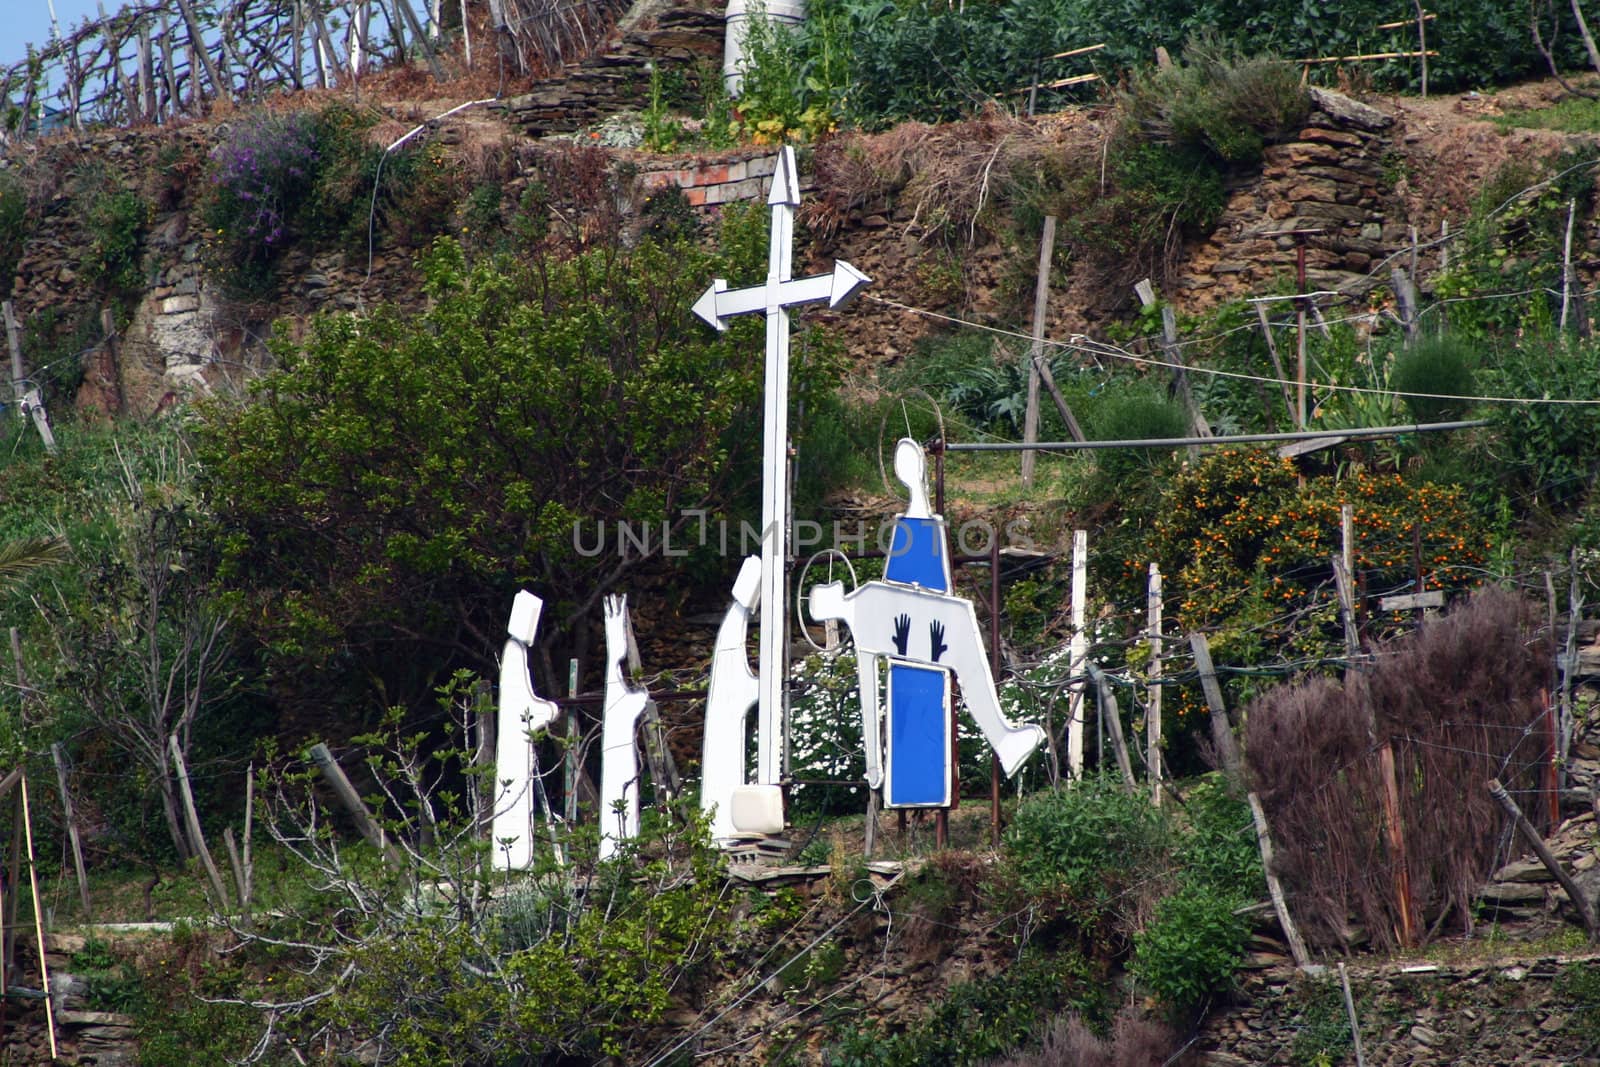 Via Crucis representation on the hill in Manarola, Cinqueterre, Italy.